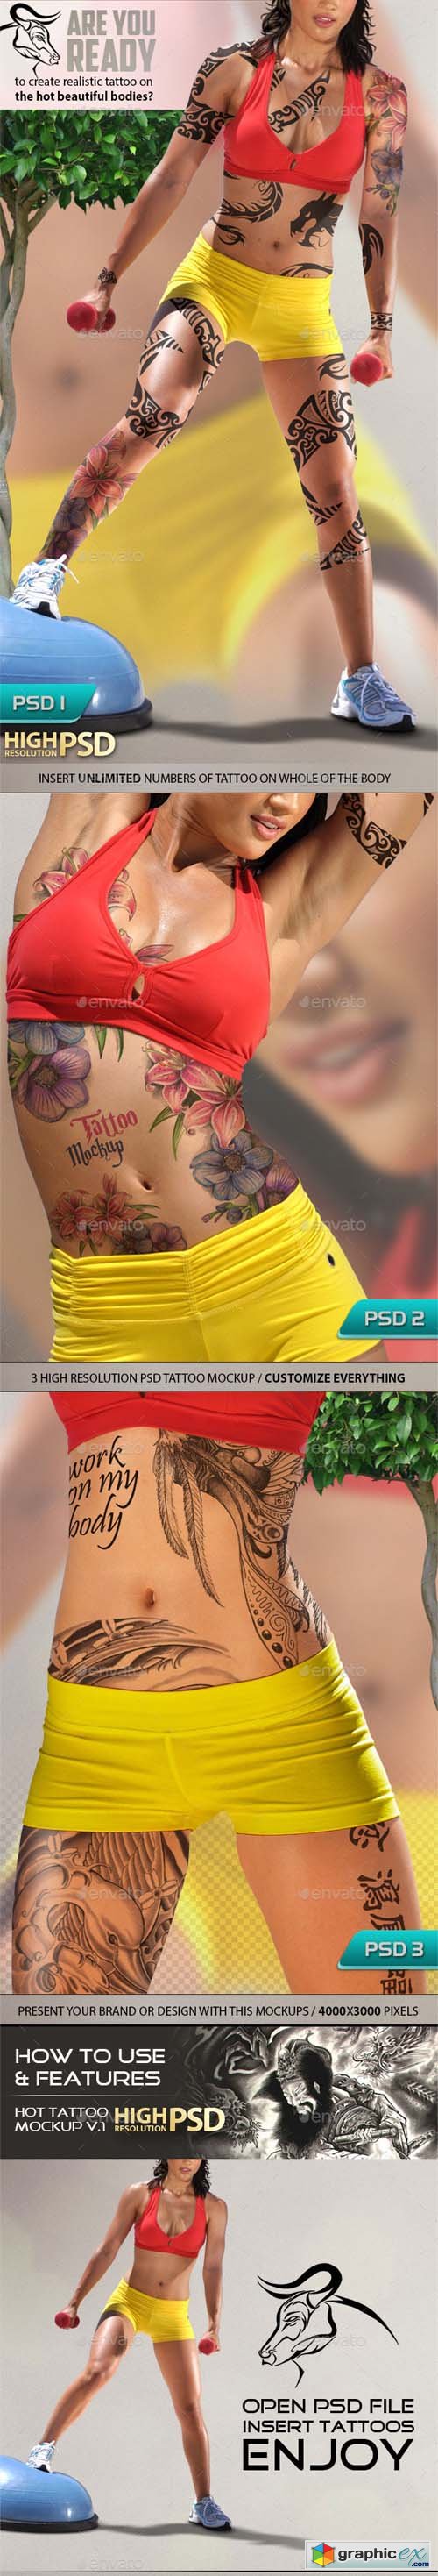 Hot tattoo on beautiful bodies Mockup V.1